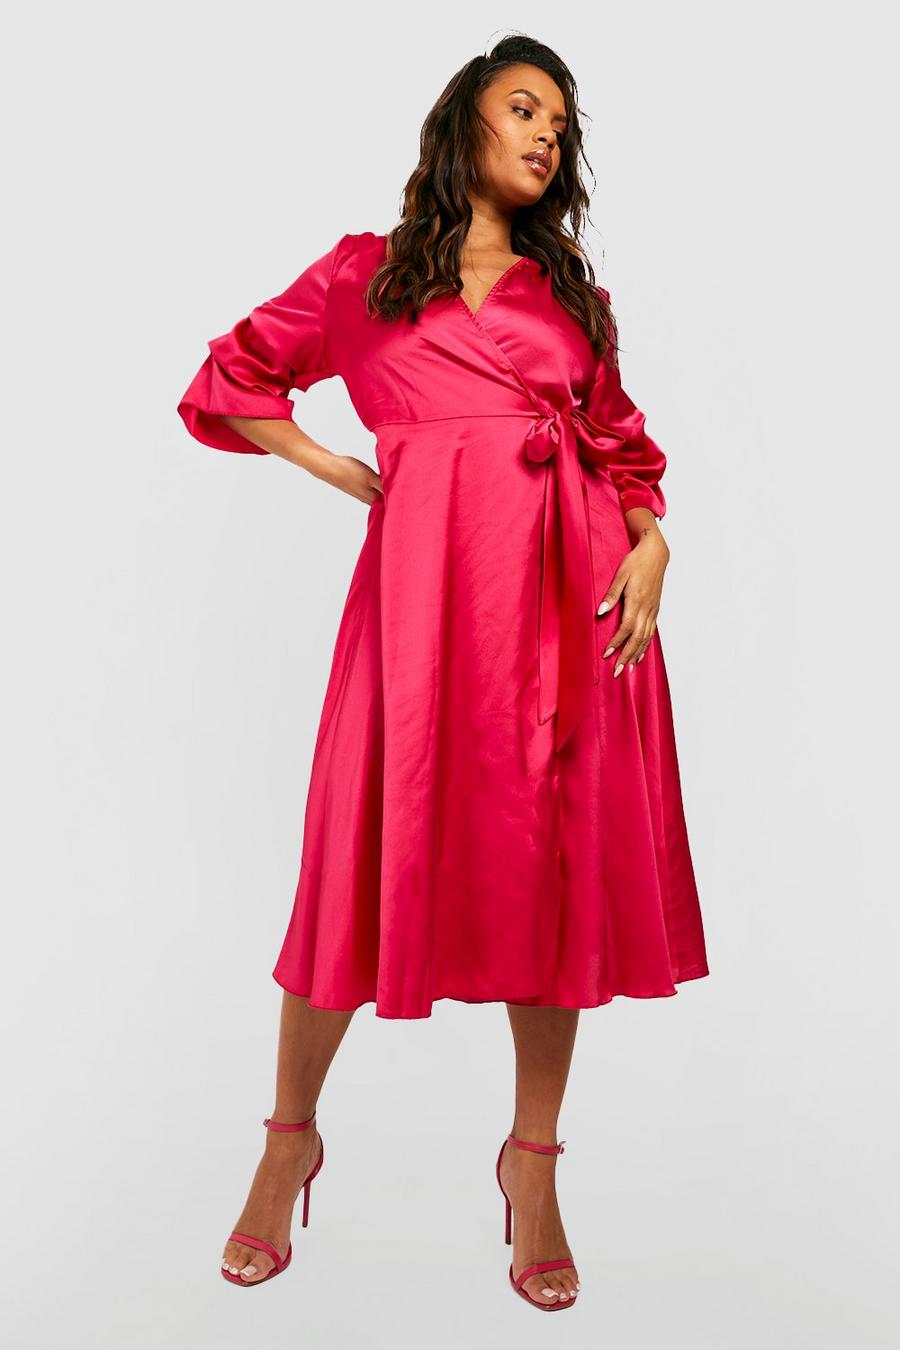 Grande taille - Robe portefeuille satinée à manches froncées, Hot pink rose image number 1